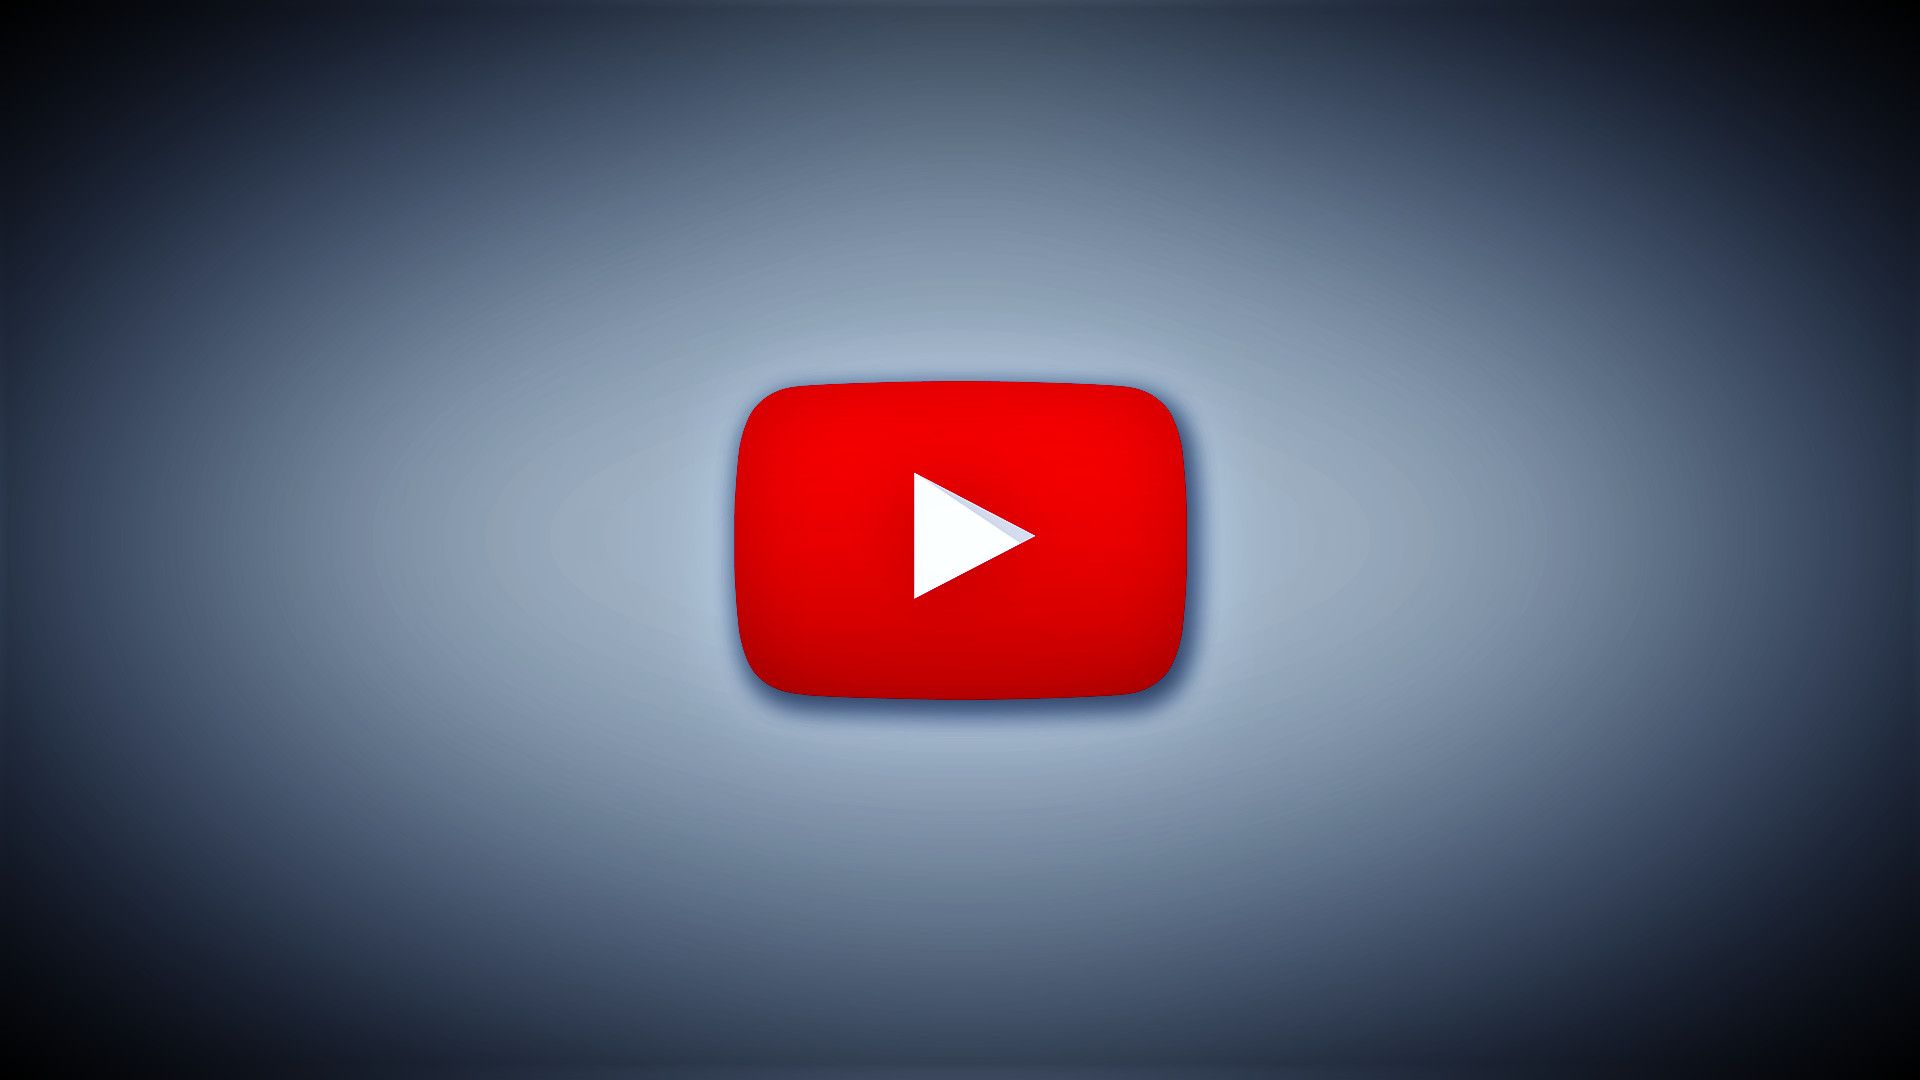 YouTube Logo Wallpaper Free YouTube Logo Background